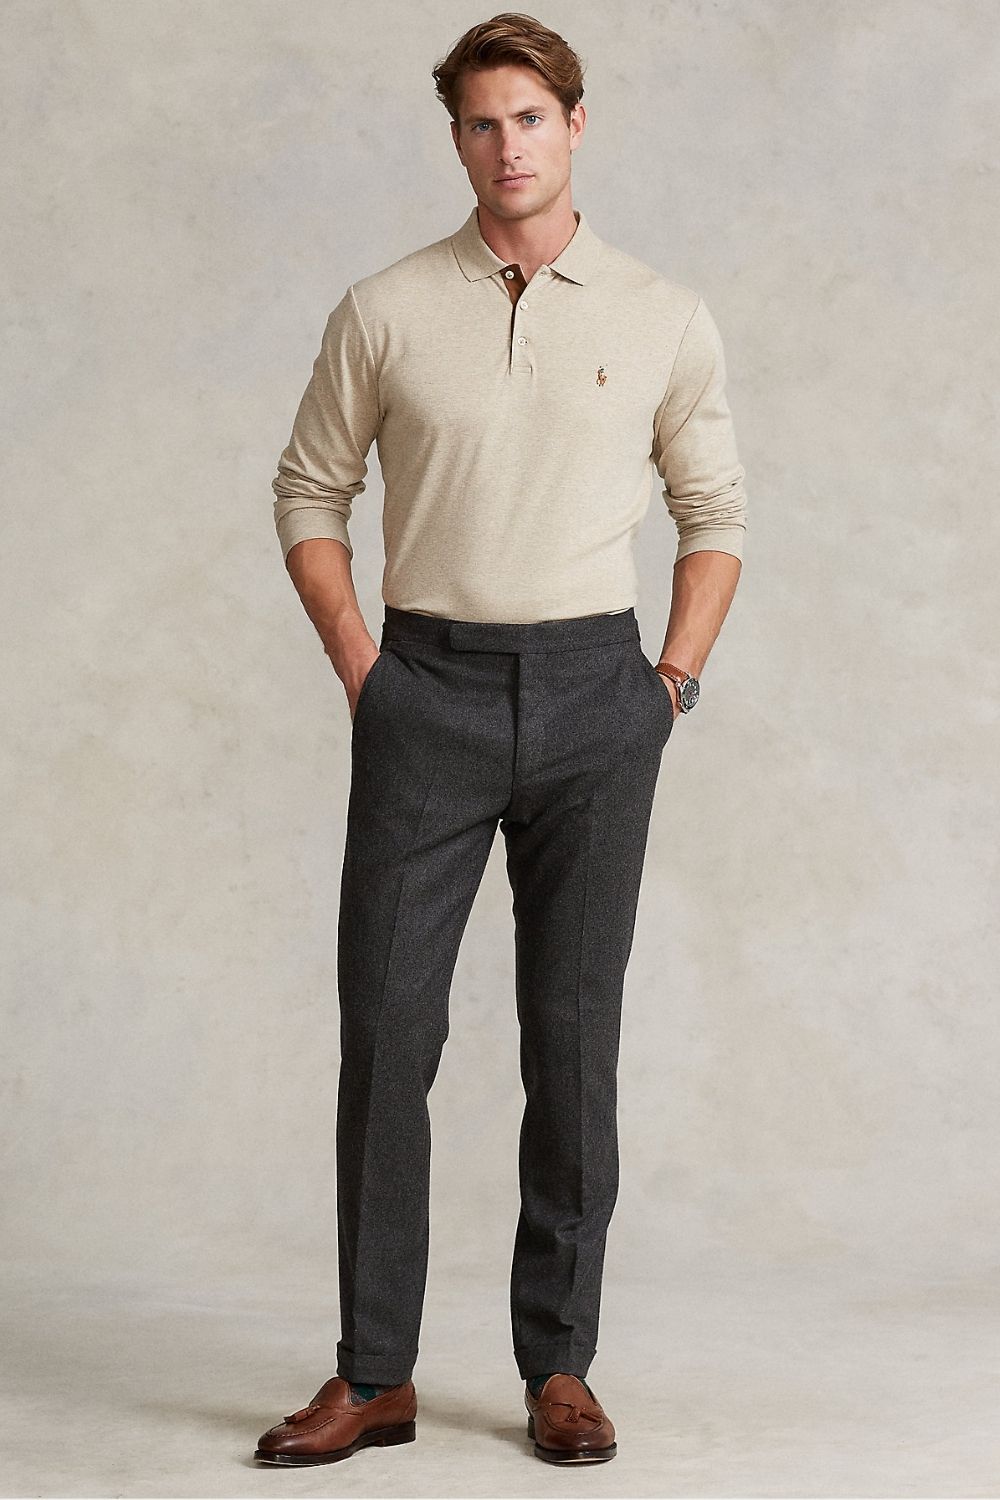 Men’s Business Casual Shirts: Dress Shirts, Polos, Button Downs - Sharp ...